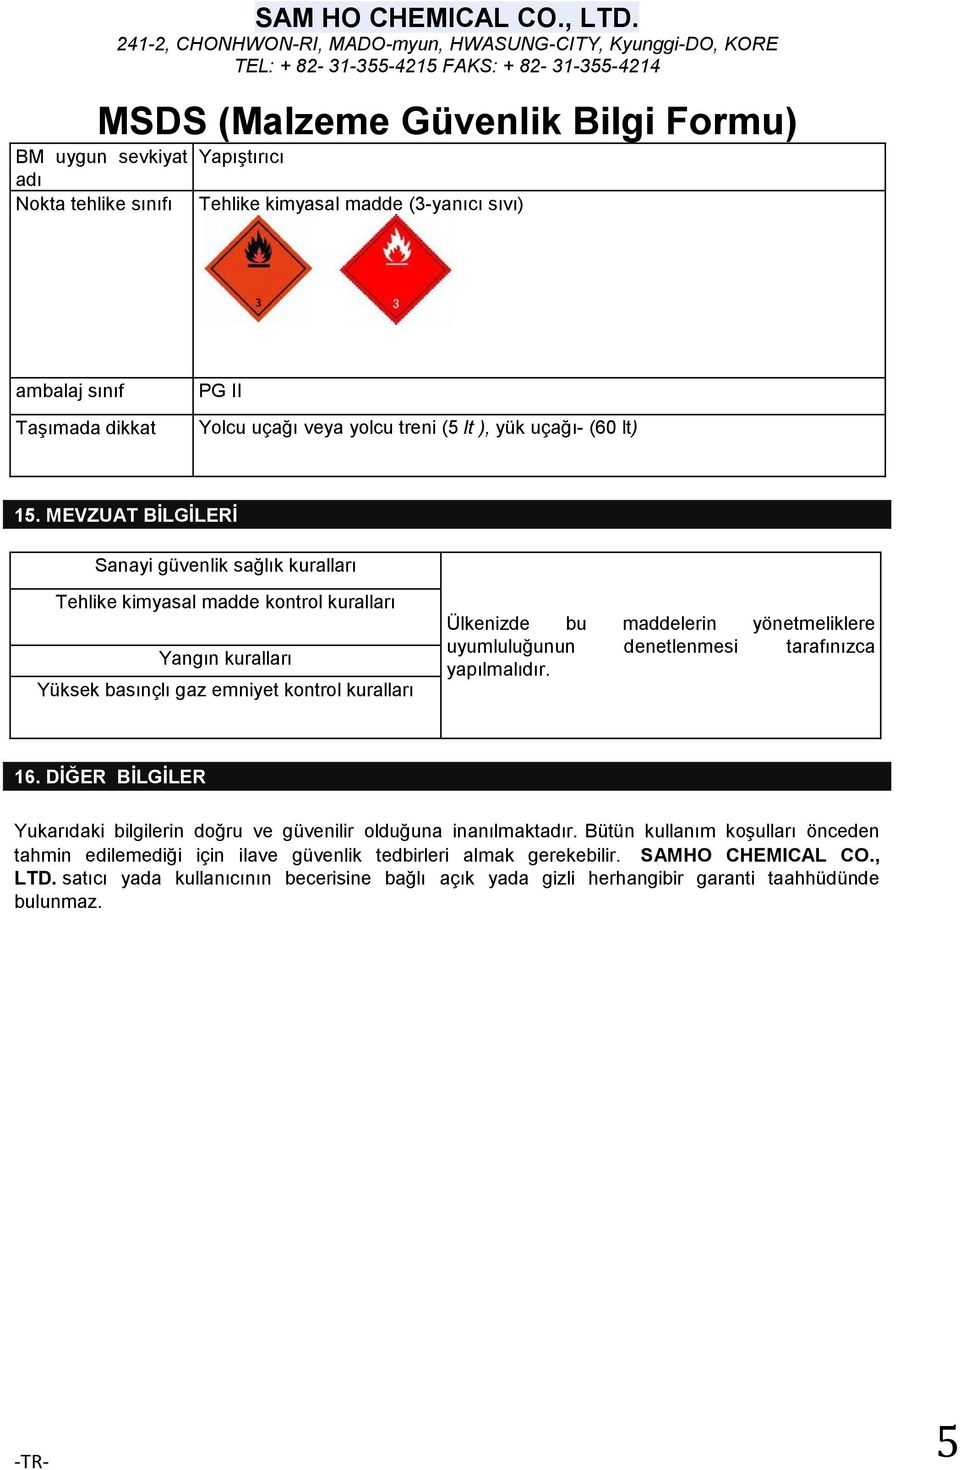 MSDS (Malzeme Güvenlik Bilgi Formu) - PDF Free Download